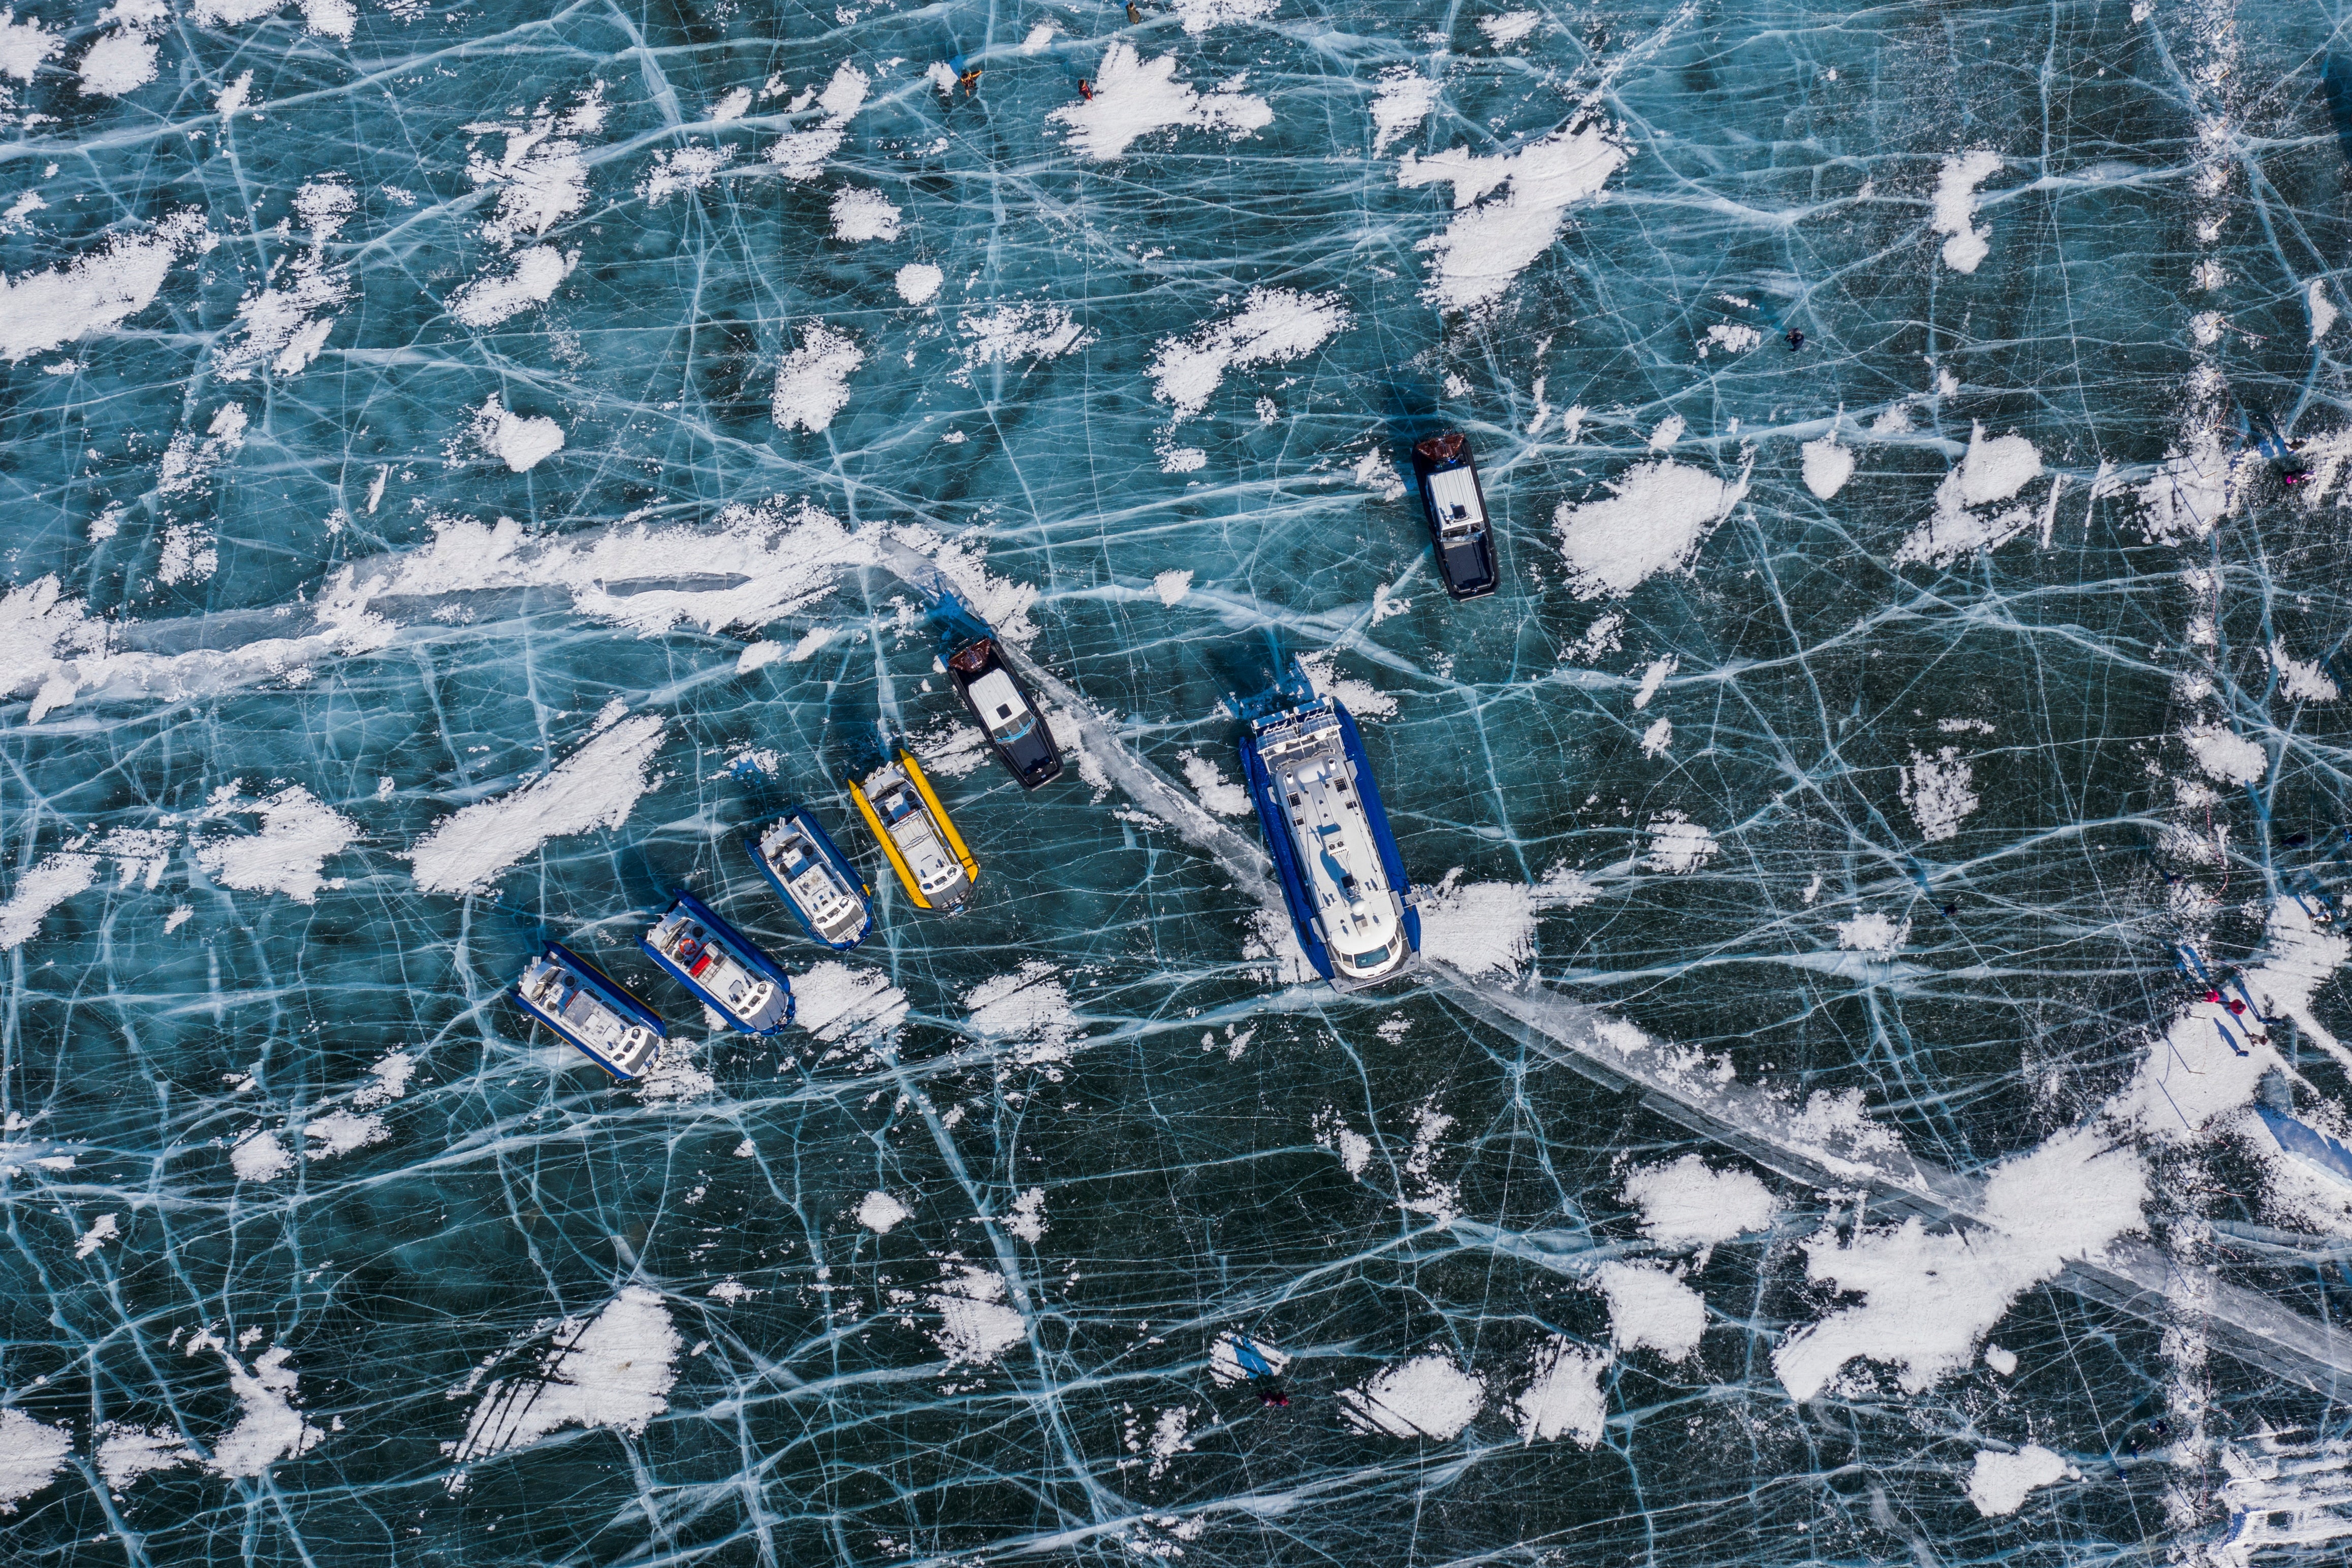 Hovercrafts on the ice of Lake Baikal near Irkutsk, Russia